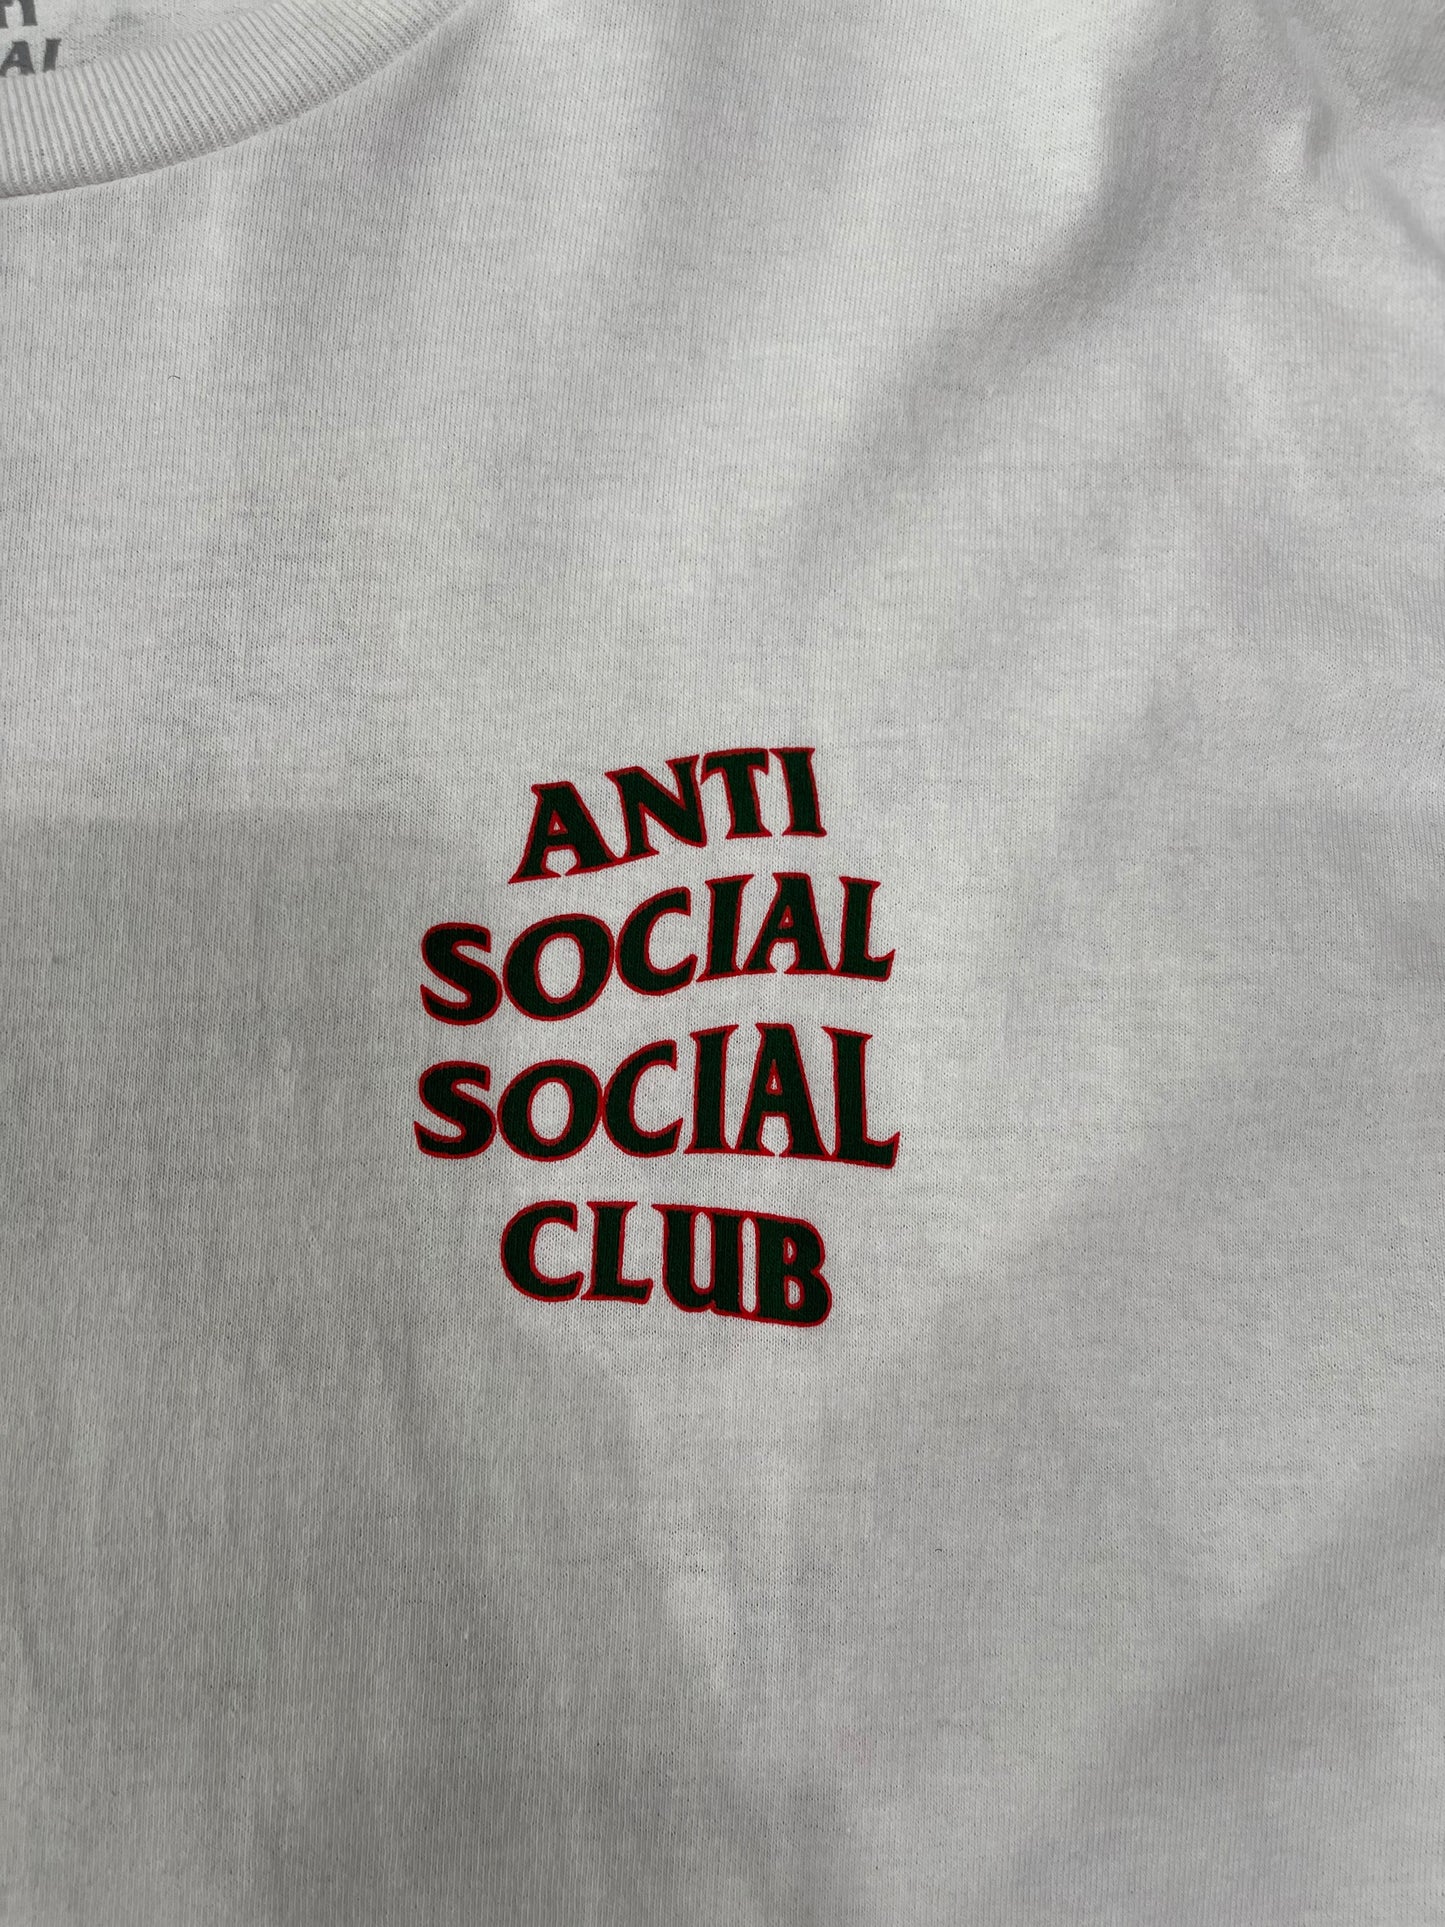 Anti Social Social Club Rodeo White Tee, T-Shirt - Supra Sneakers